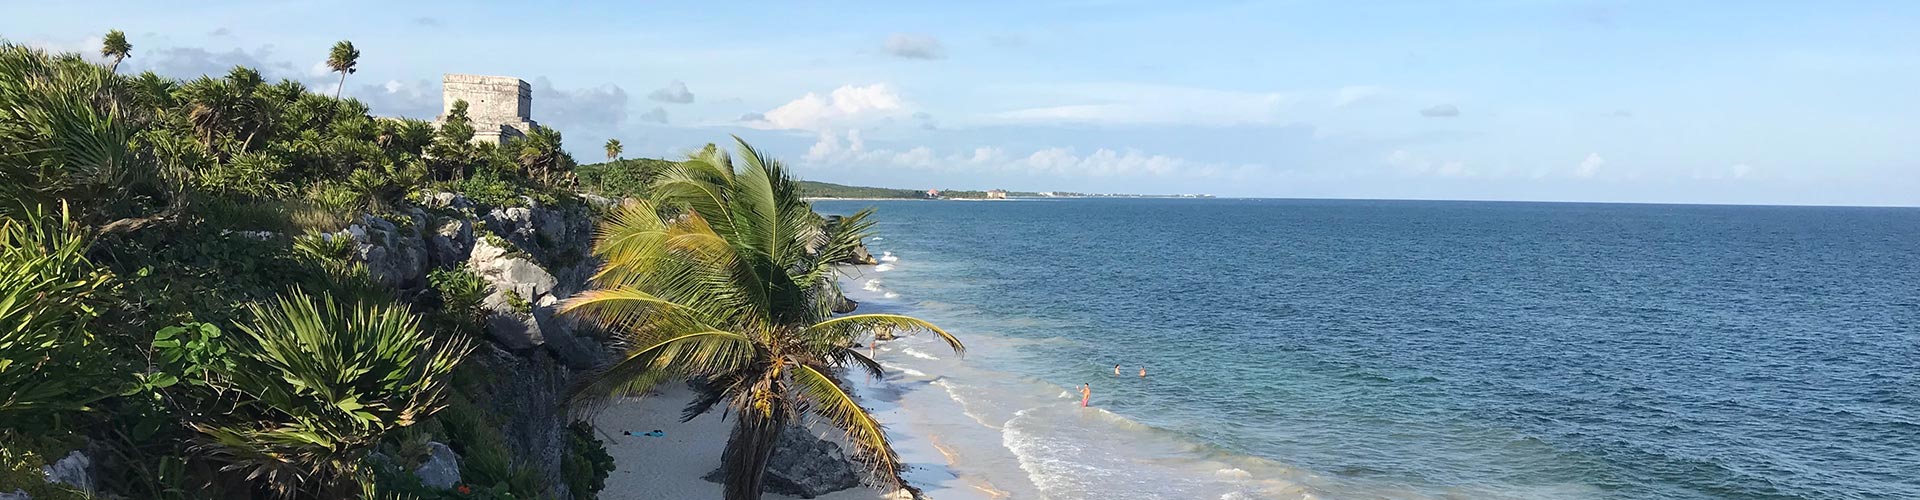 Entspannen auf der Halbinsel Yucatán